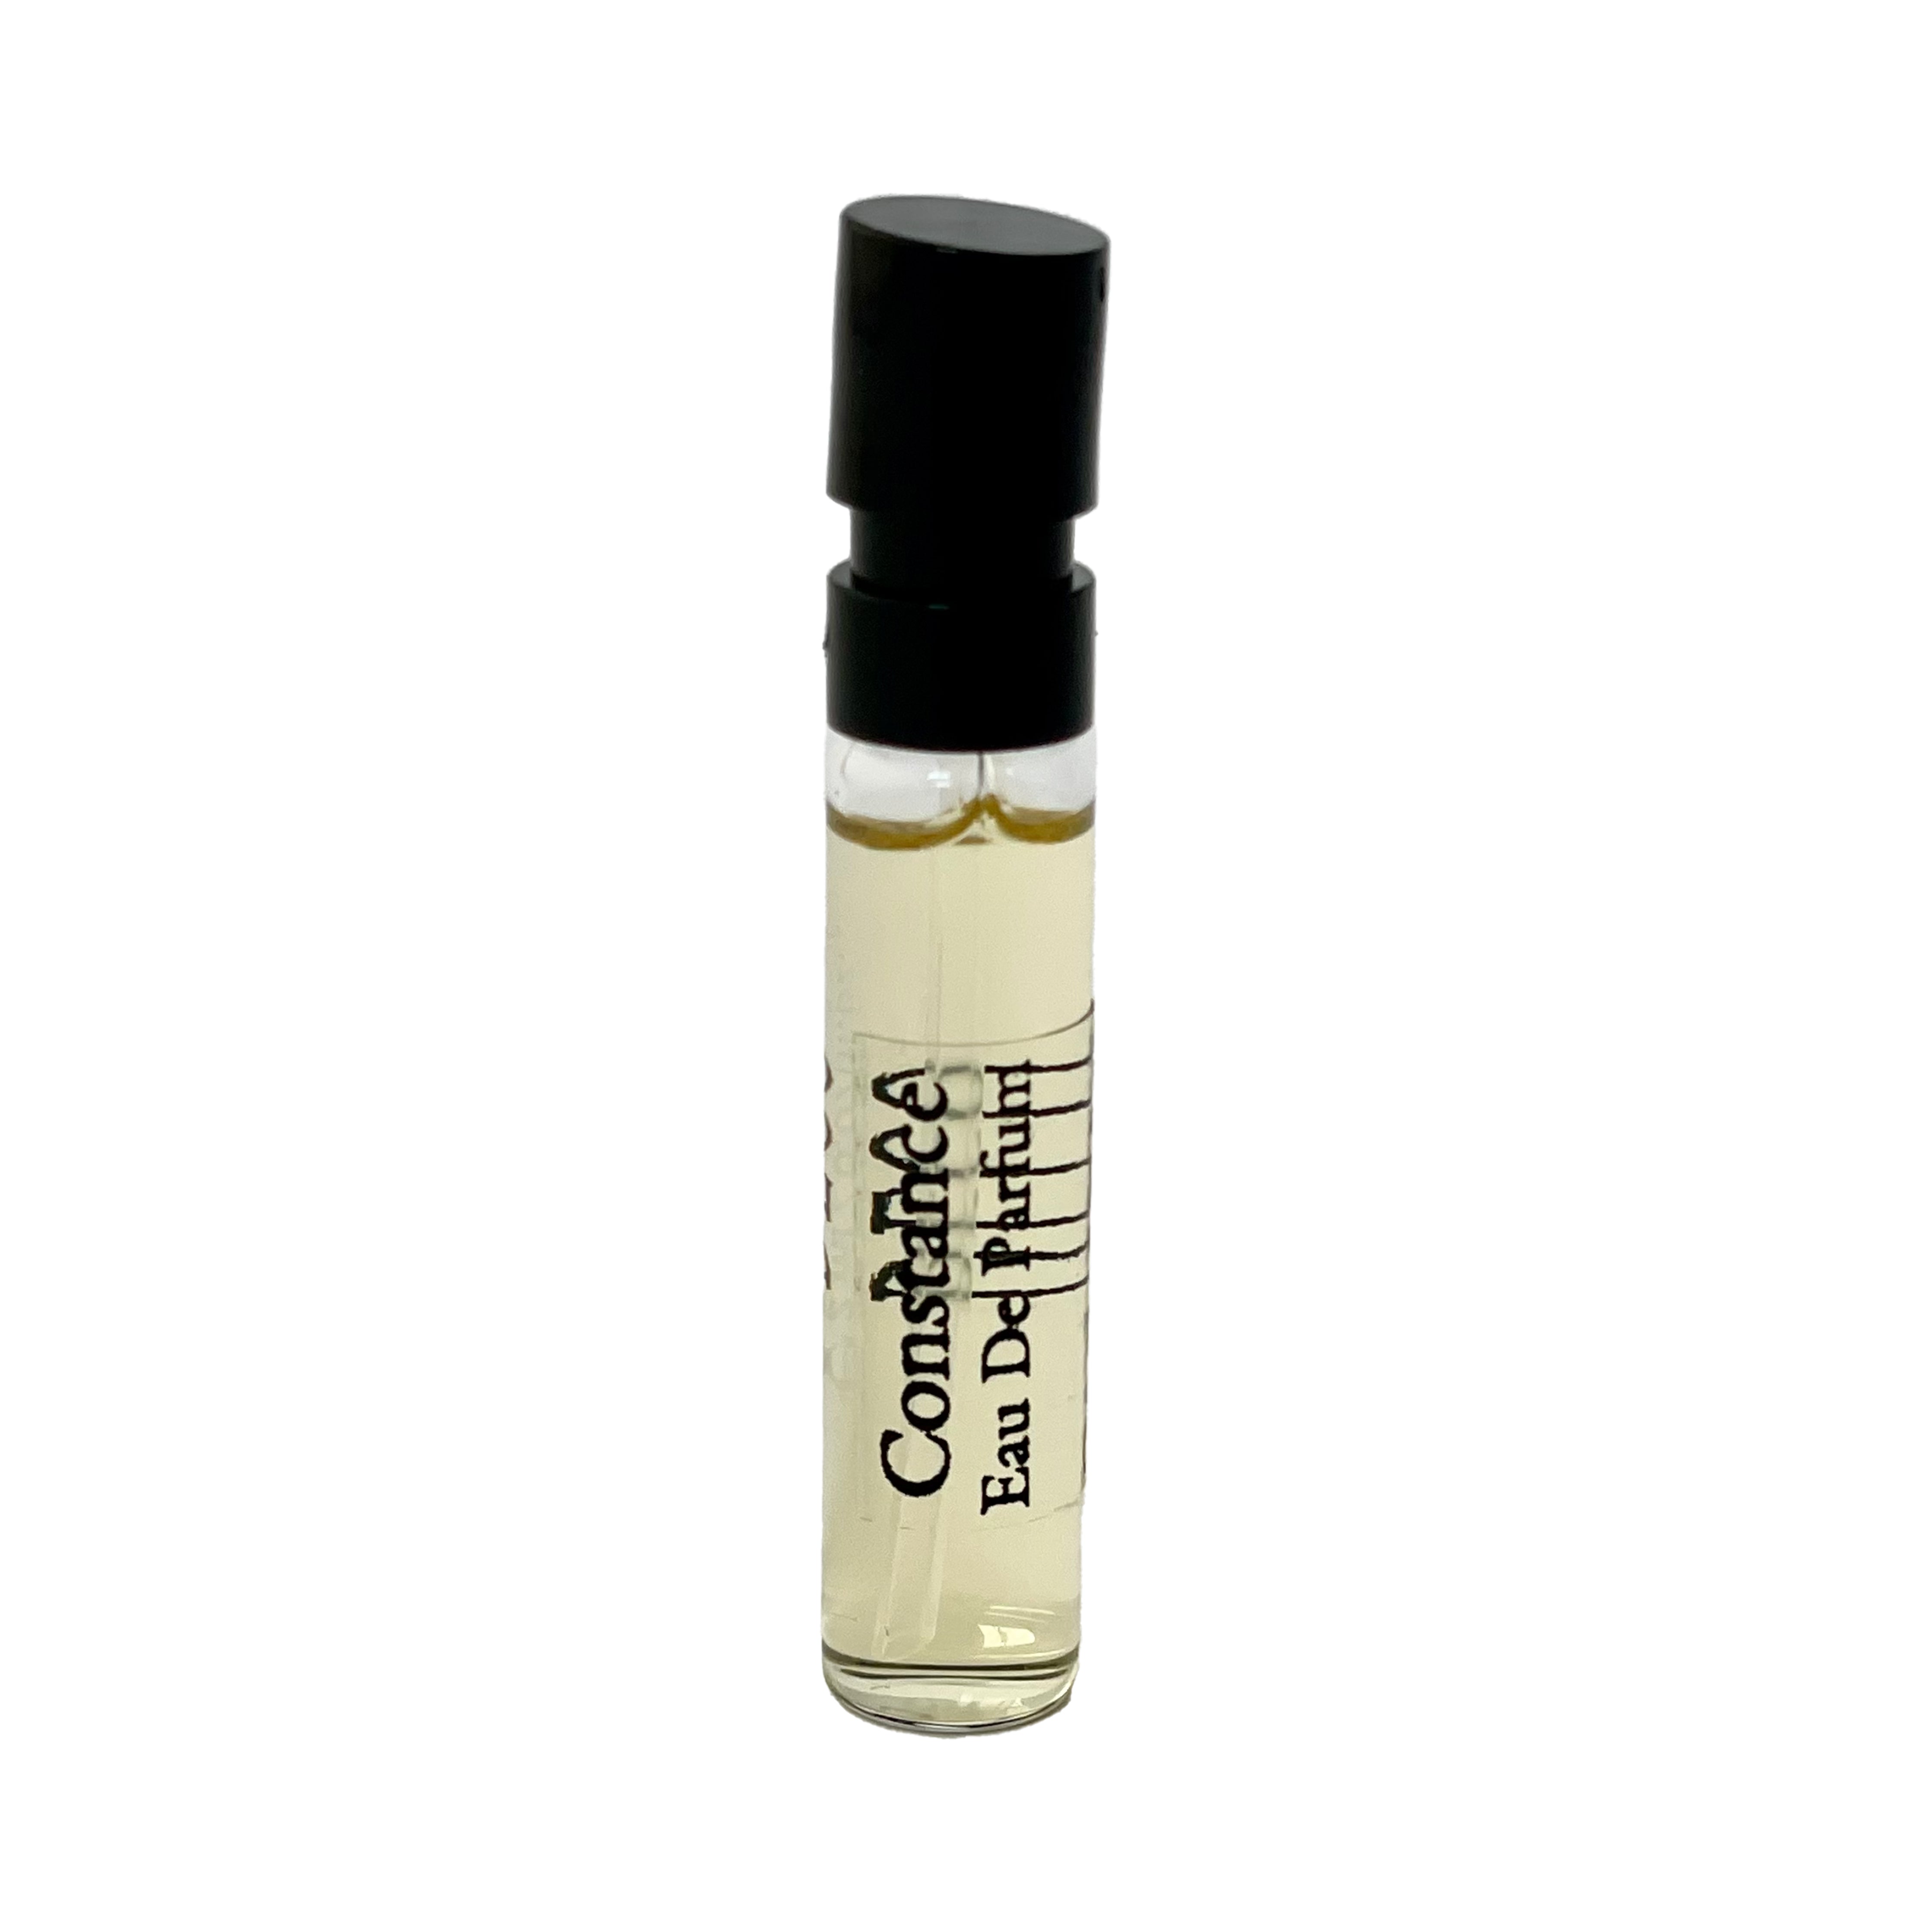 Constance - 2ml Fragrance Sample